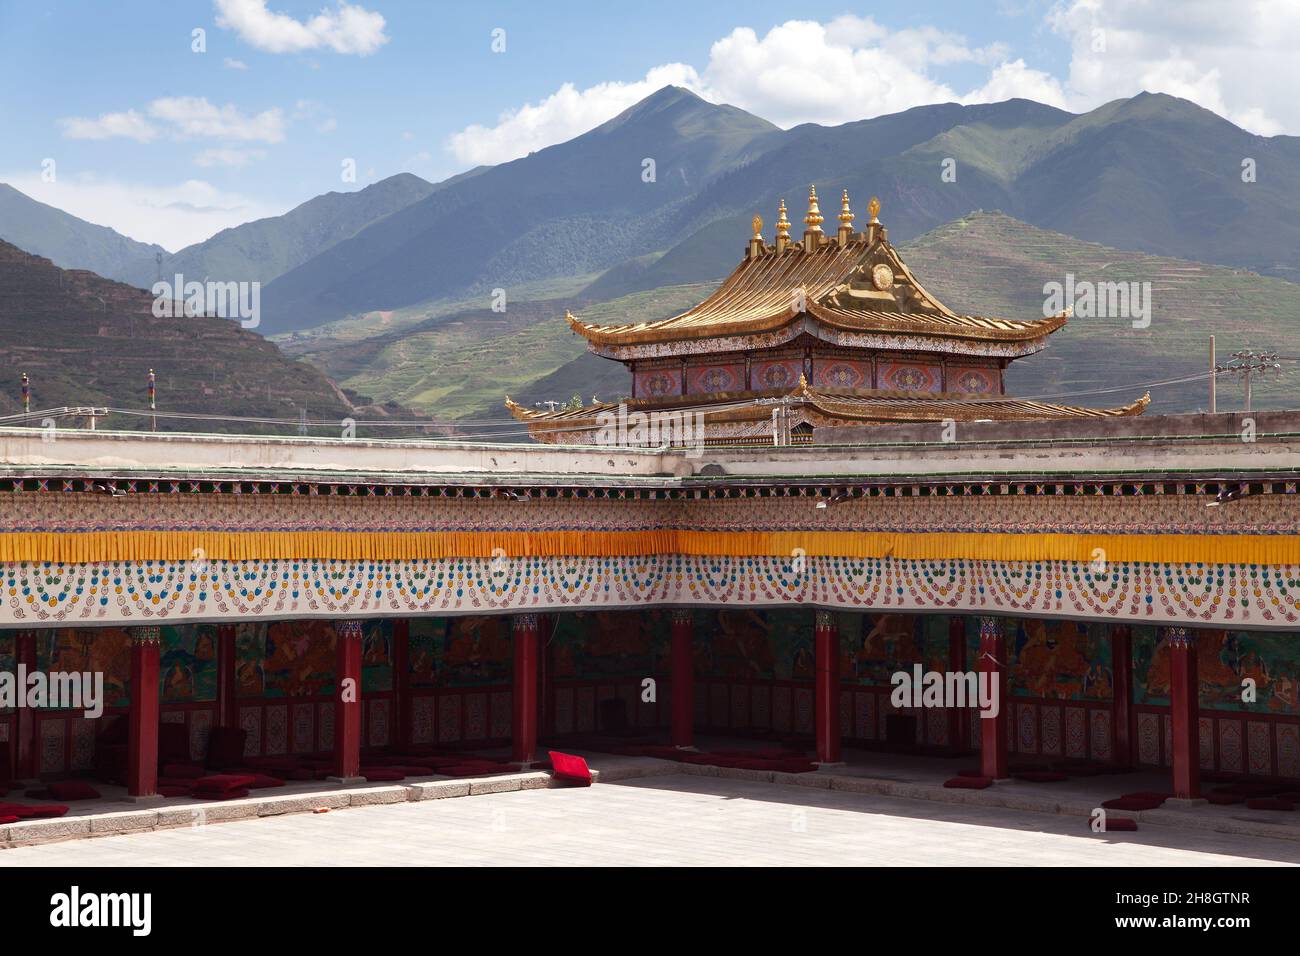 TONGREN KLOSTER, CHINA, 23. Juli 2013 - Detail aus Tongren Kloster oder Longwu Kloster - Huangnan, Rebkong, Guizhou, Provinz Qinghai, China Stockfoto